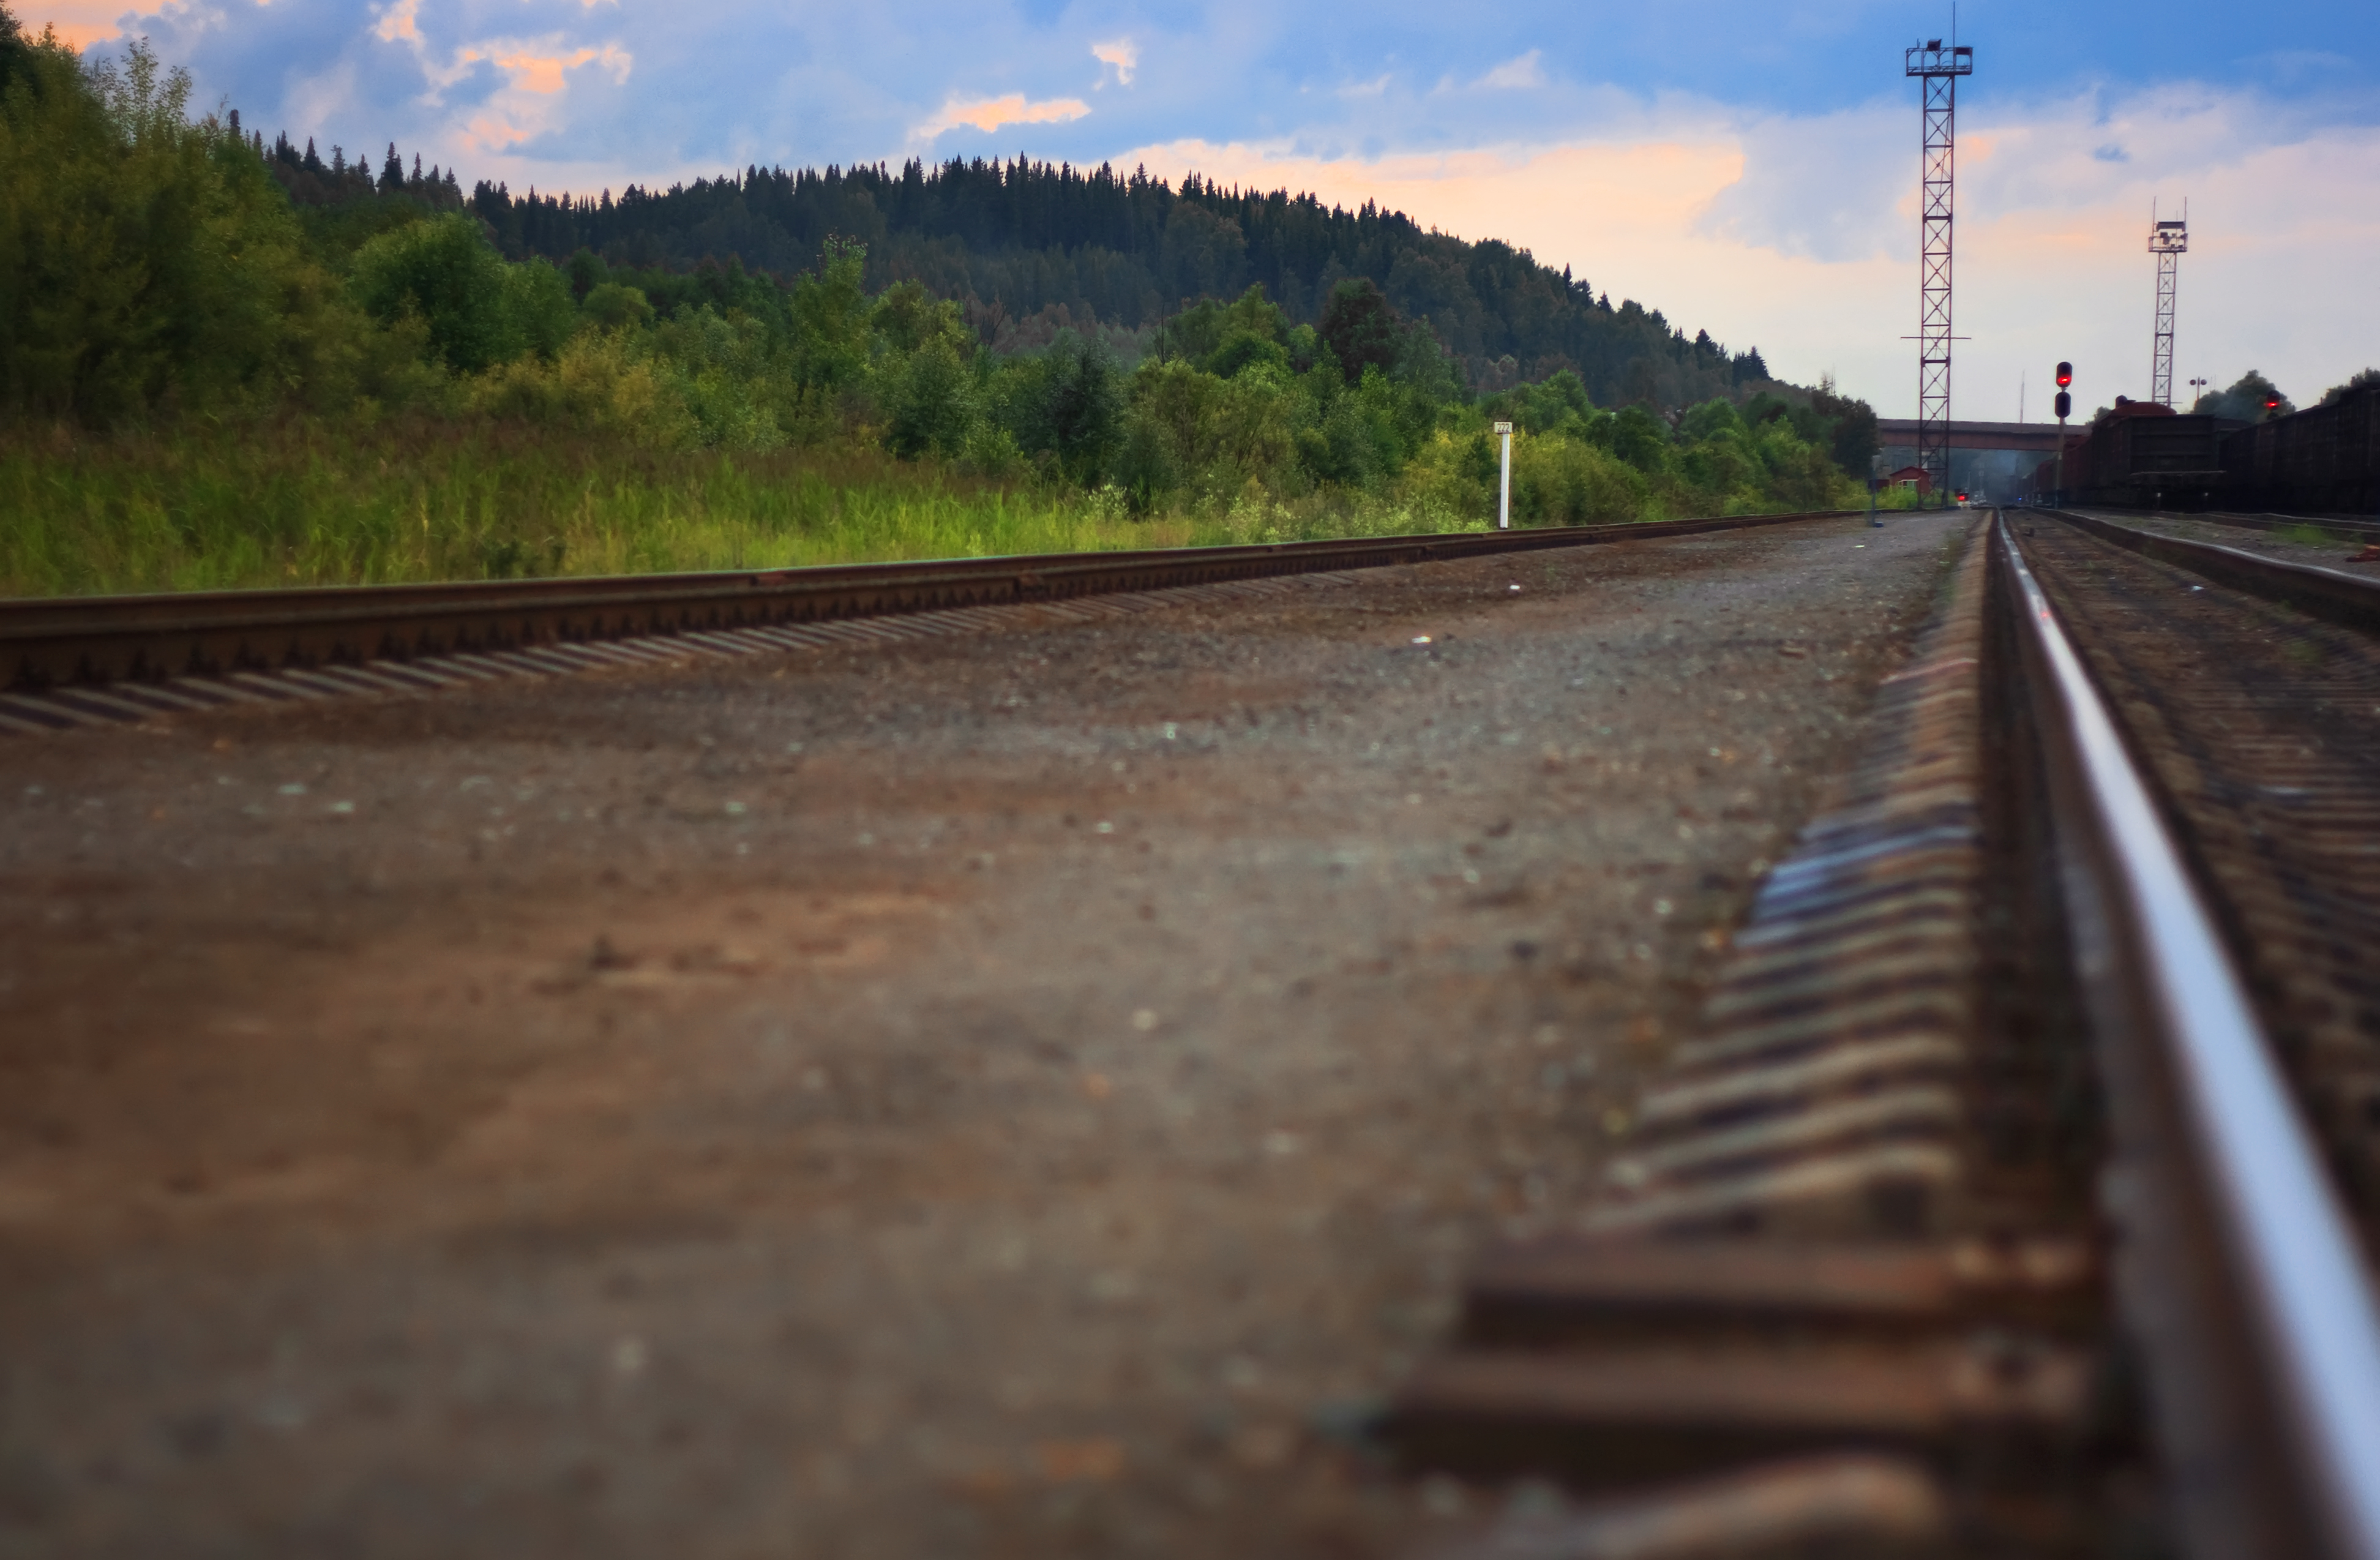 Railroad photo